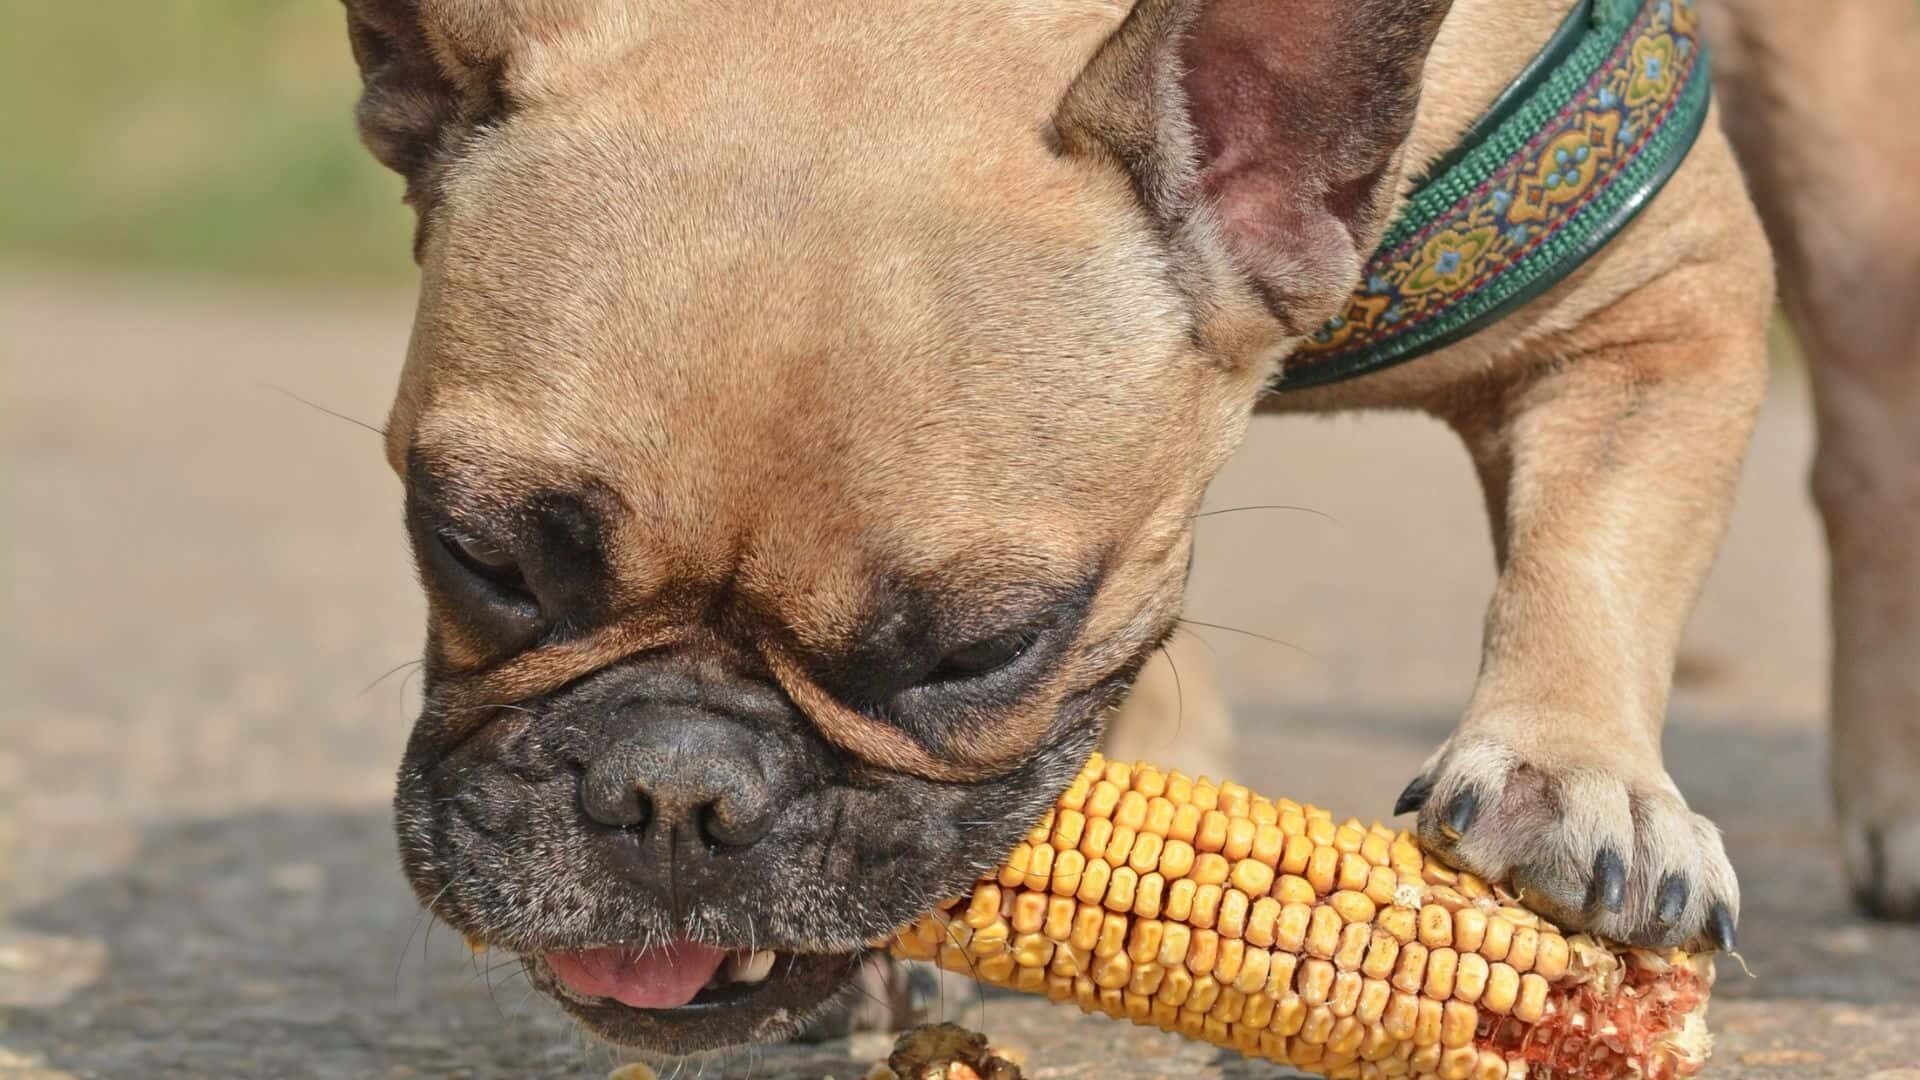 How to help my dog pass a corn cob?